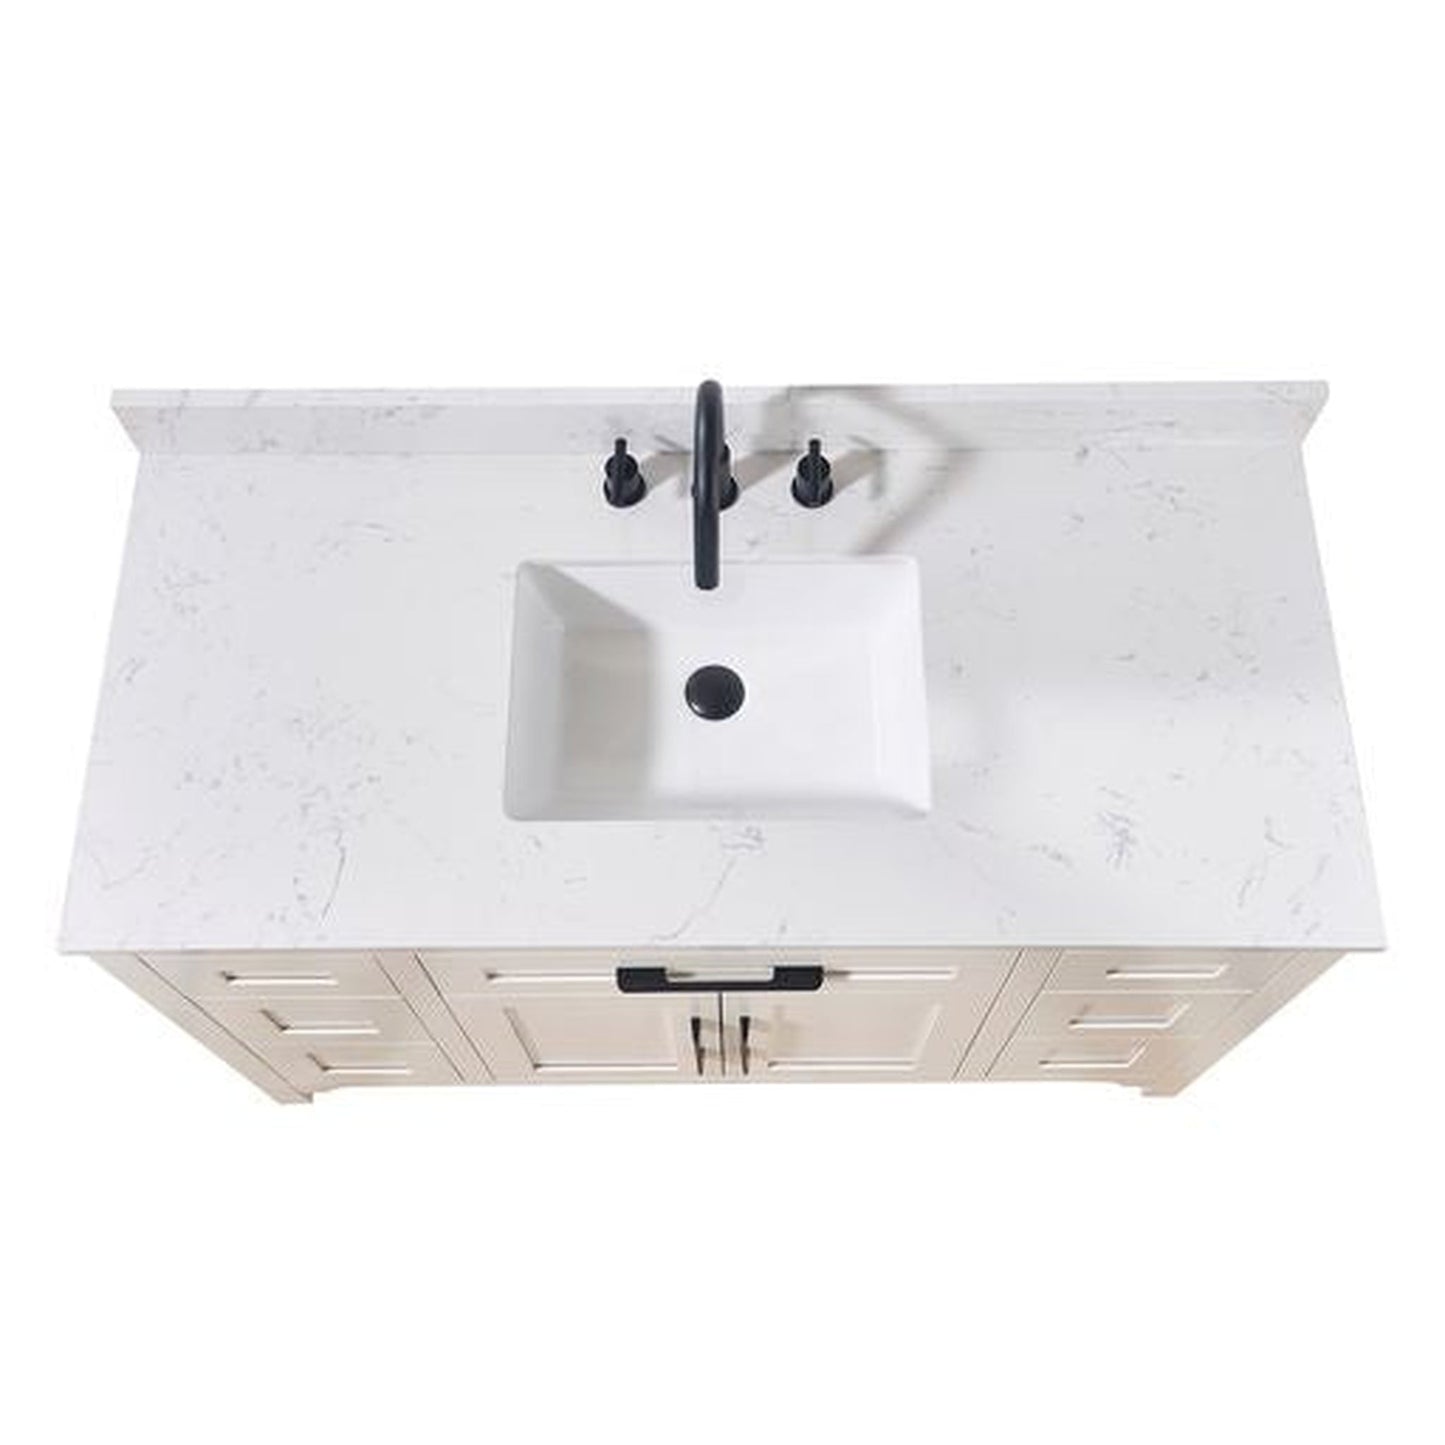 Altair Trento 49" x 22" Aosta White Composite Stone Bathroom Vanity Top With White SInk